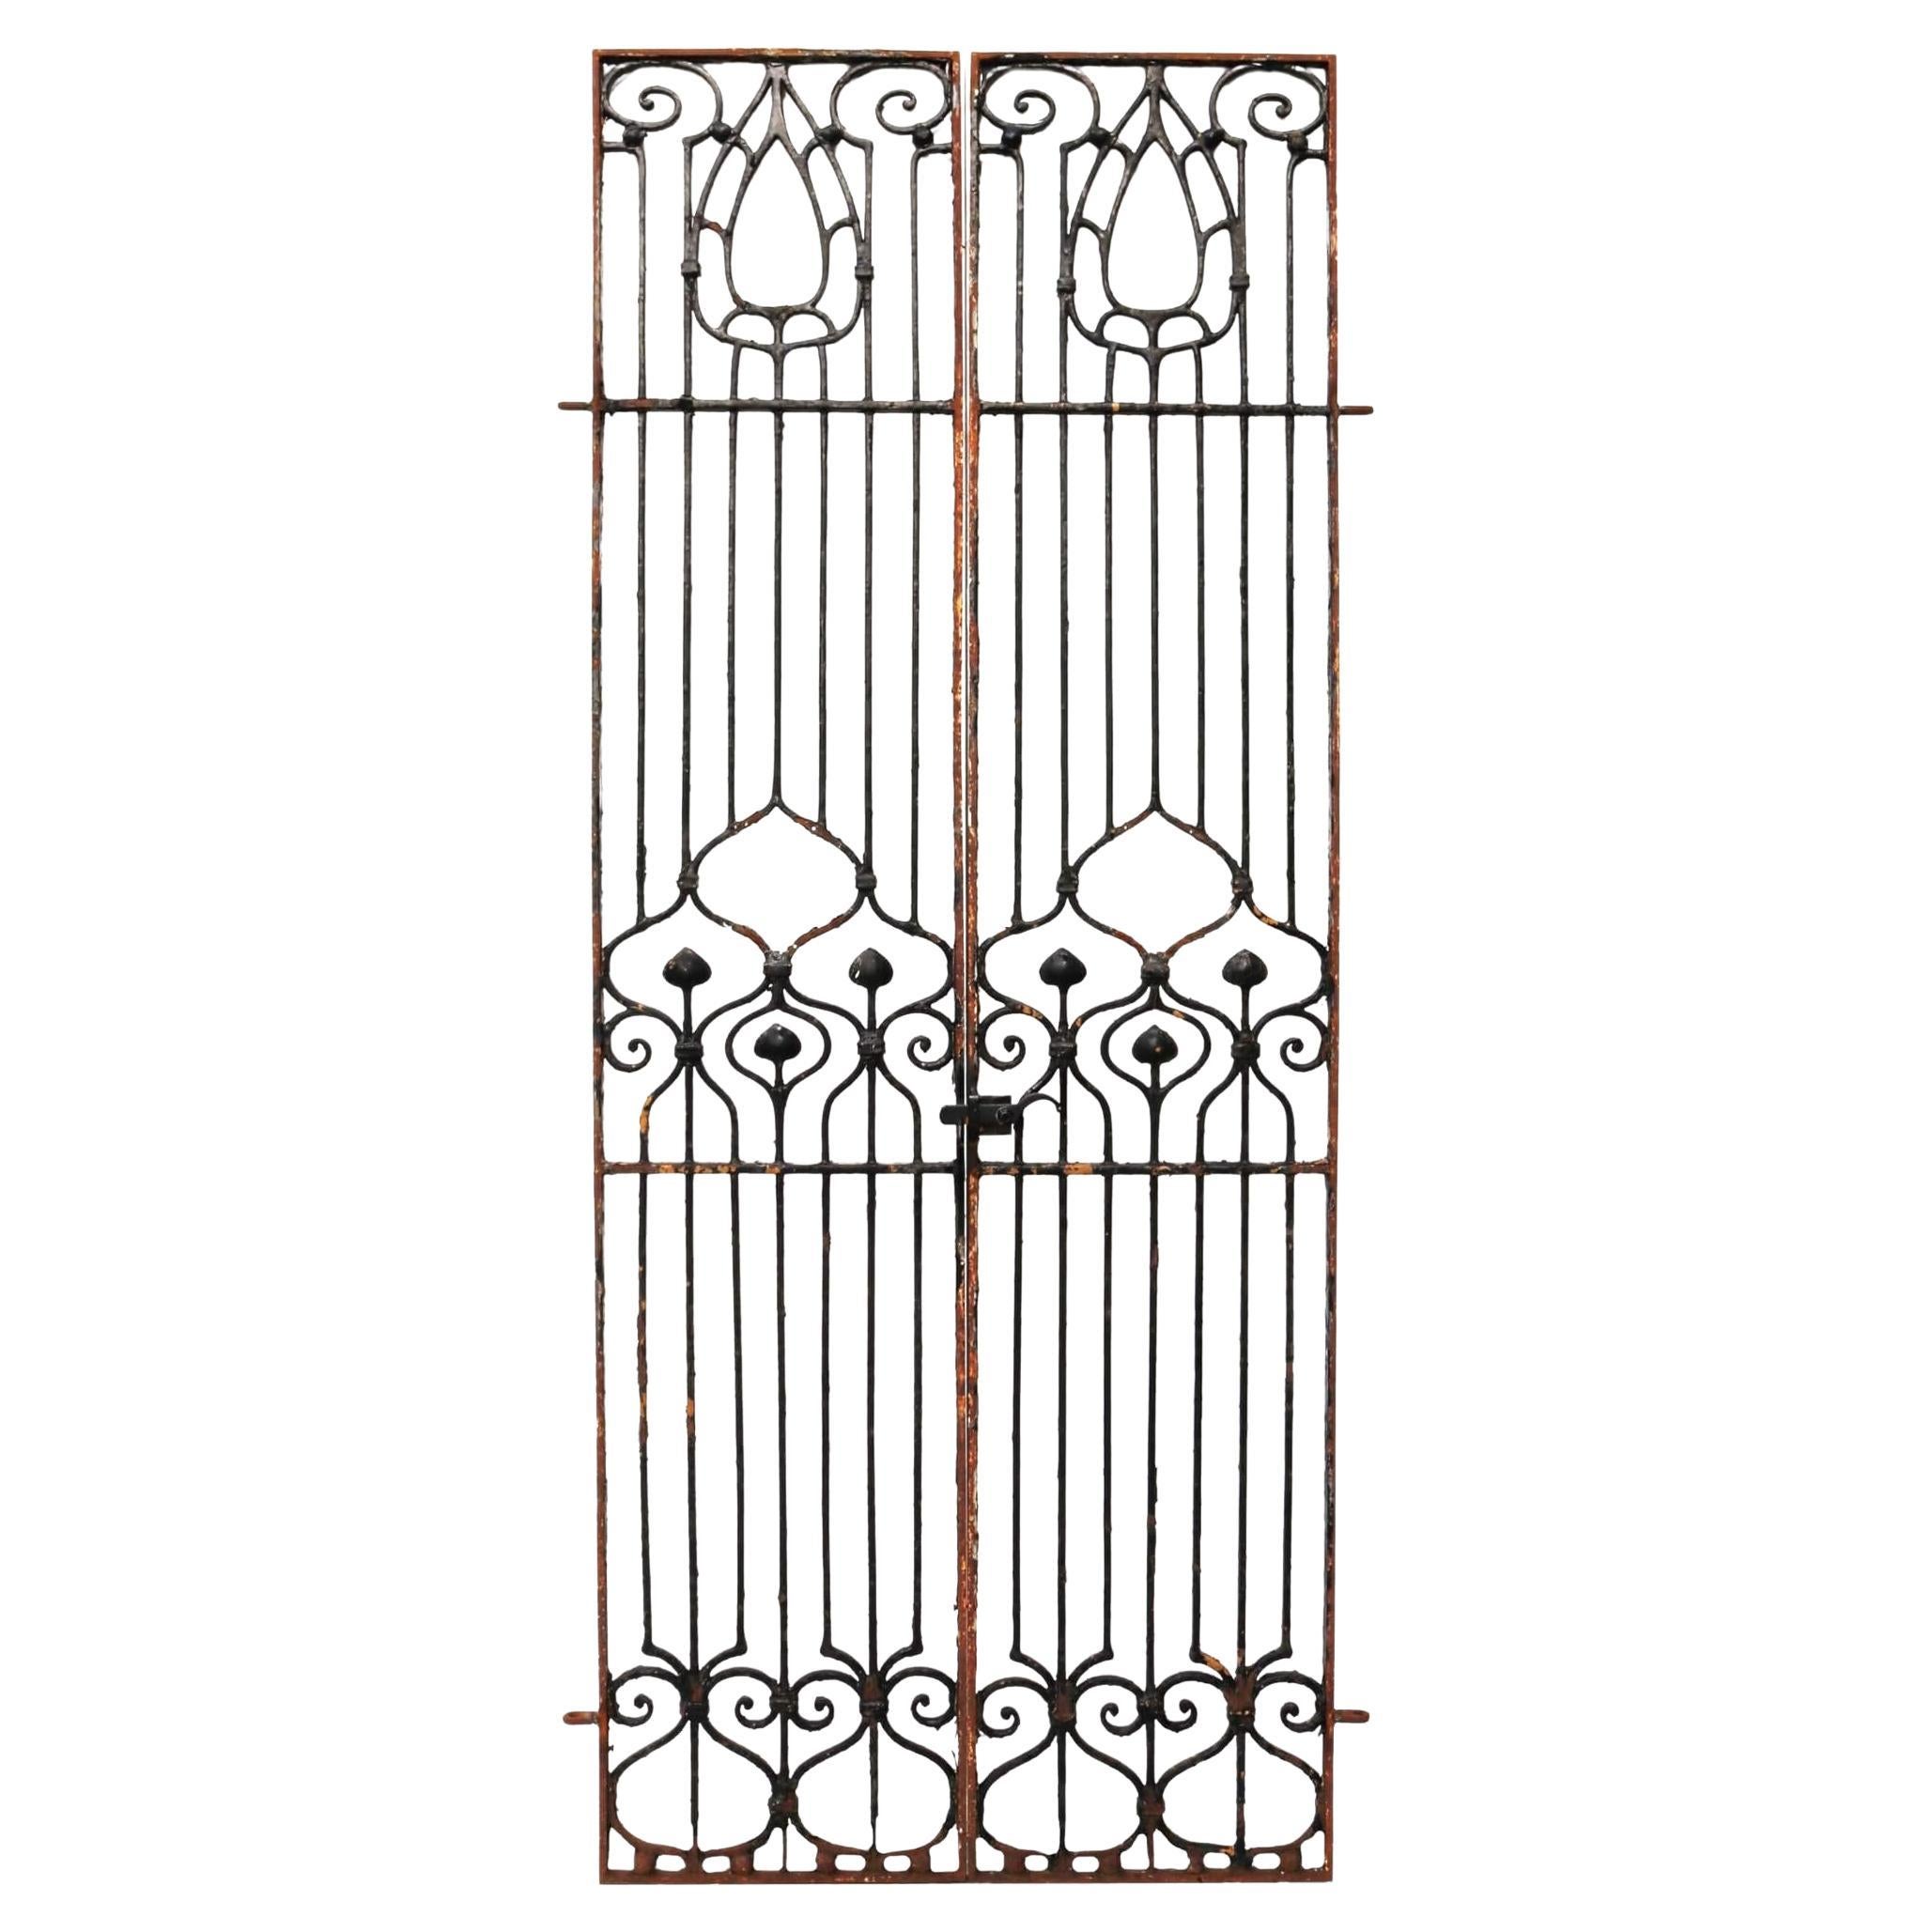 Set of Tall Art Nouveau Wrought Iron Gates For Sale